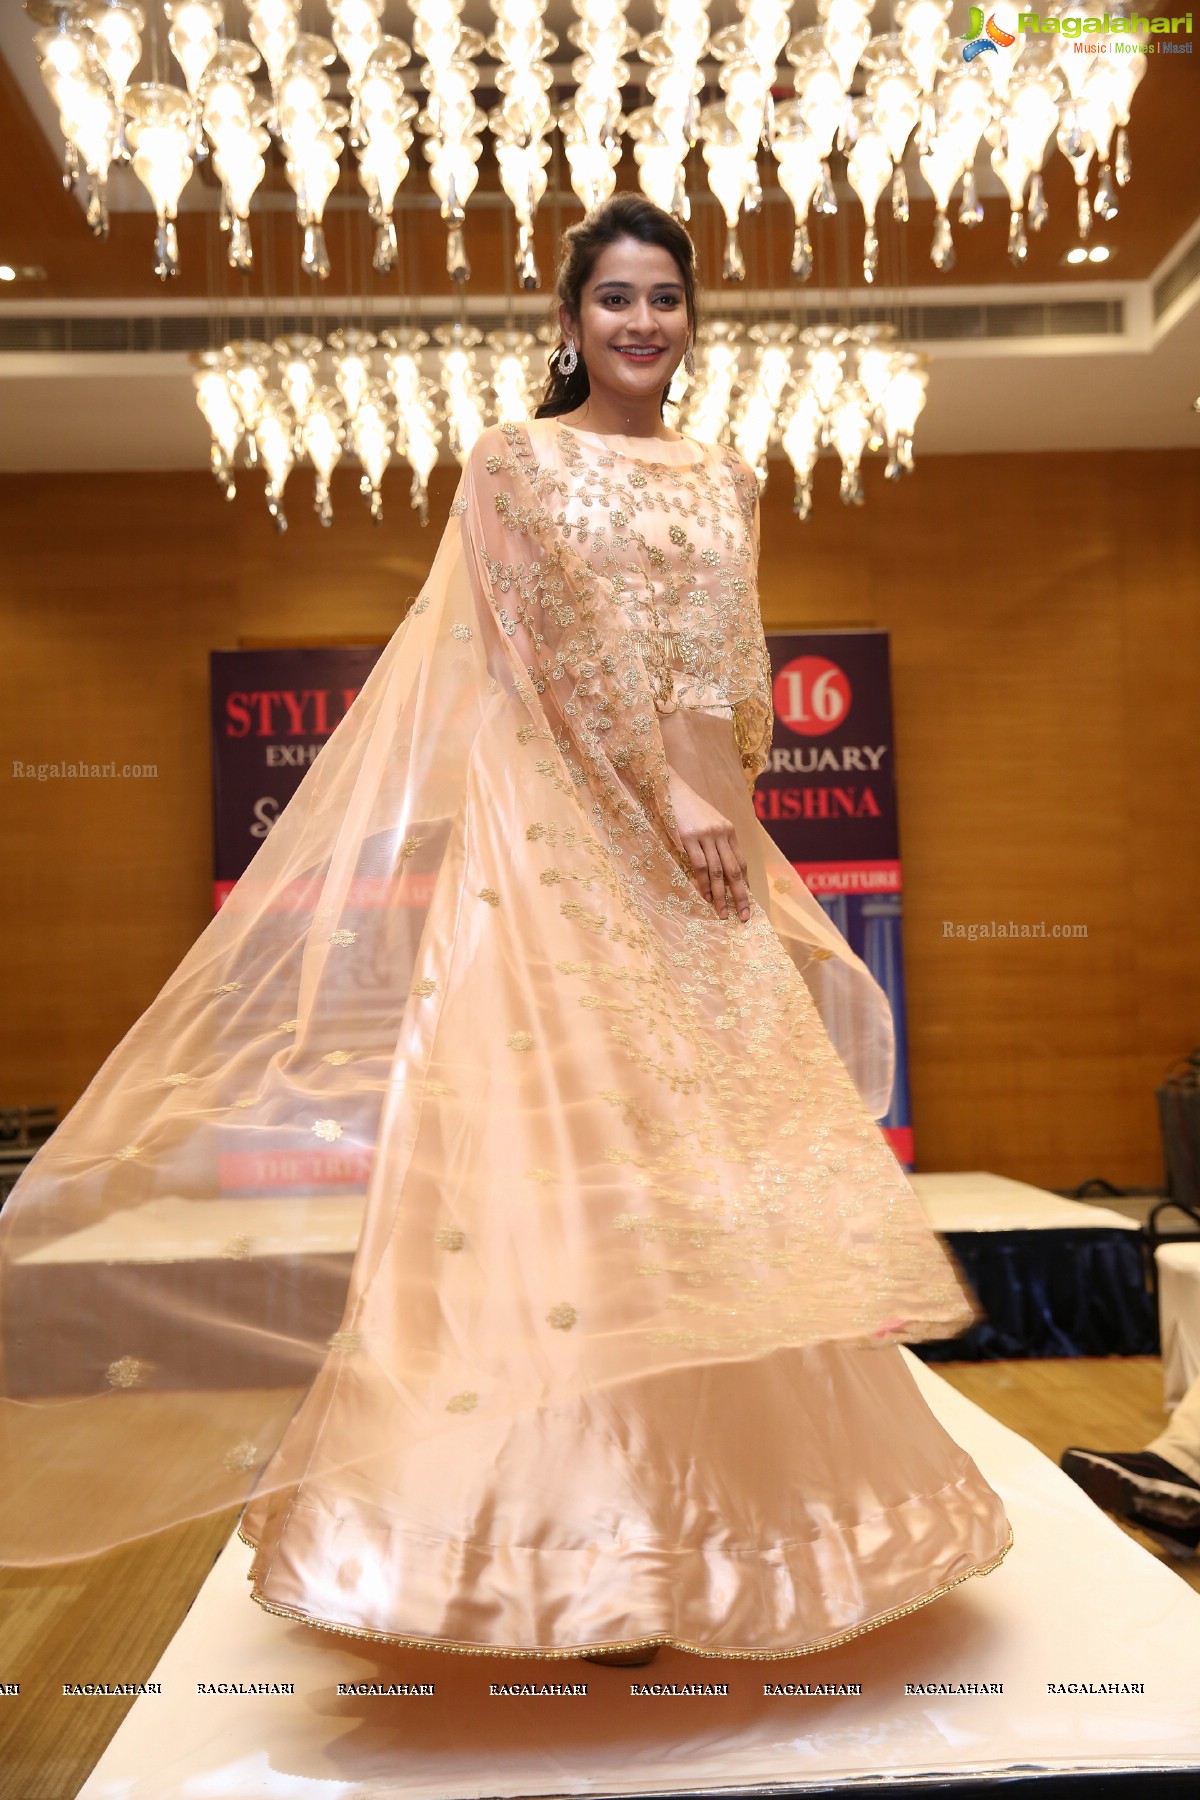 Style Bazaar Fashion Show & Curtain Raiser at Hotel Marigold